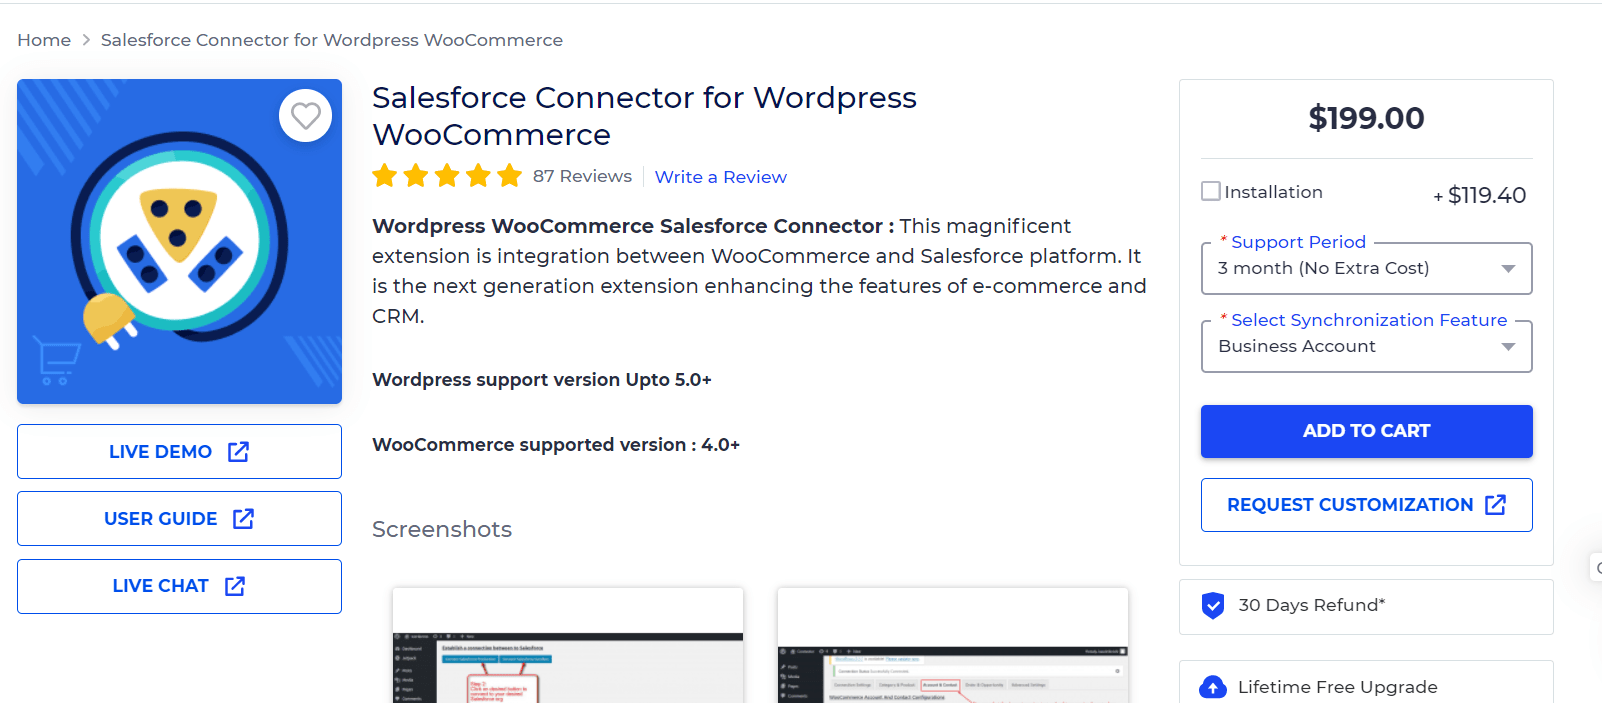 Salesforce Connector for WordPress WooCommerce 